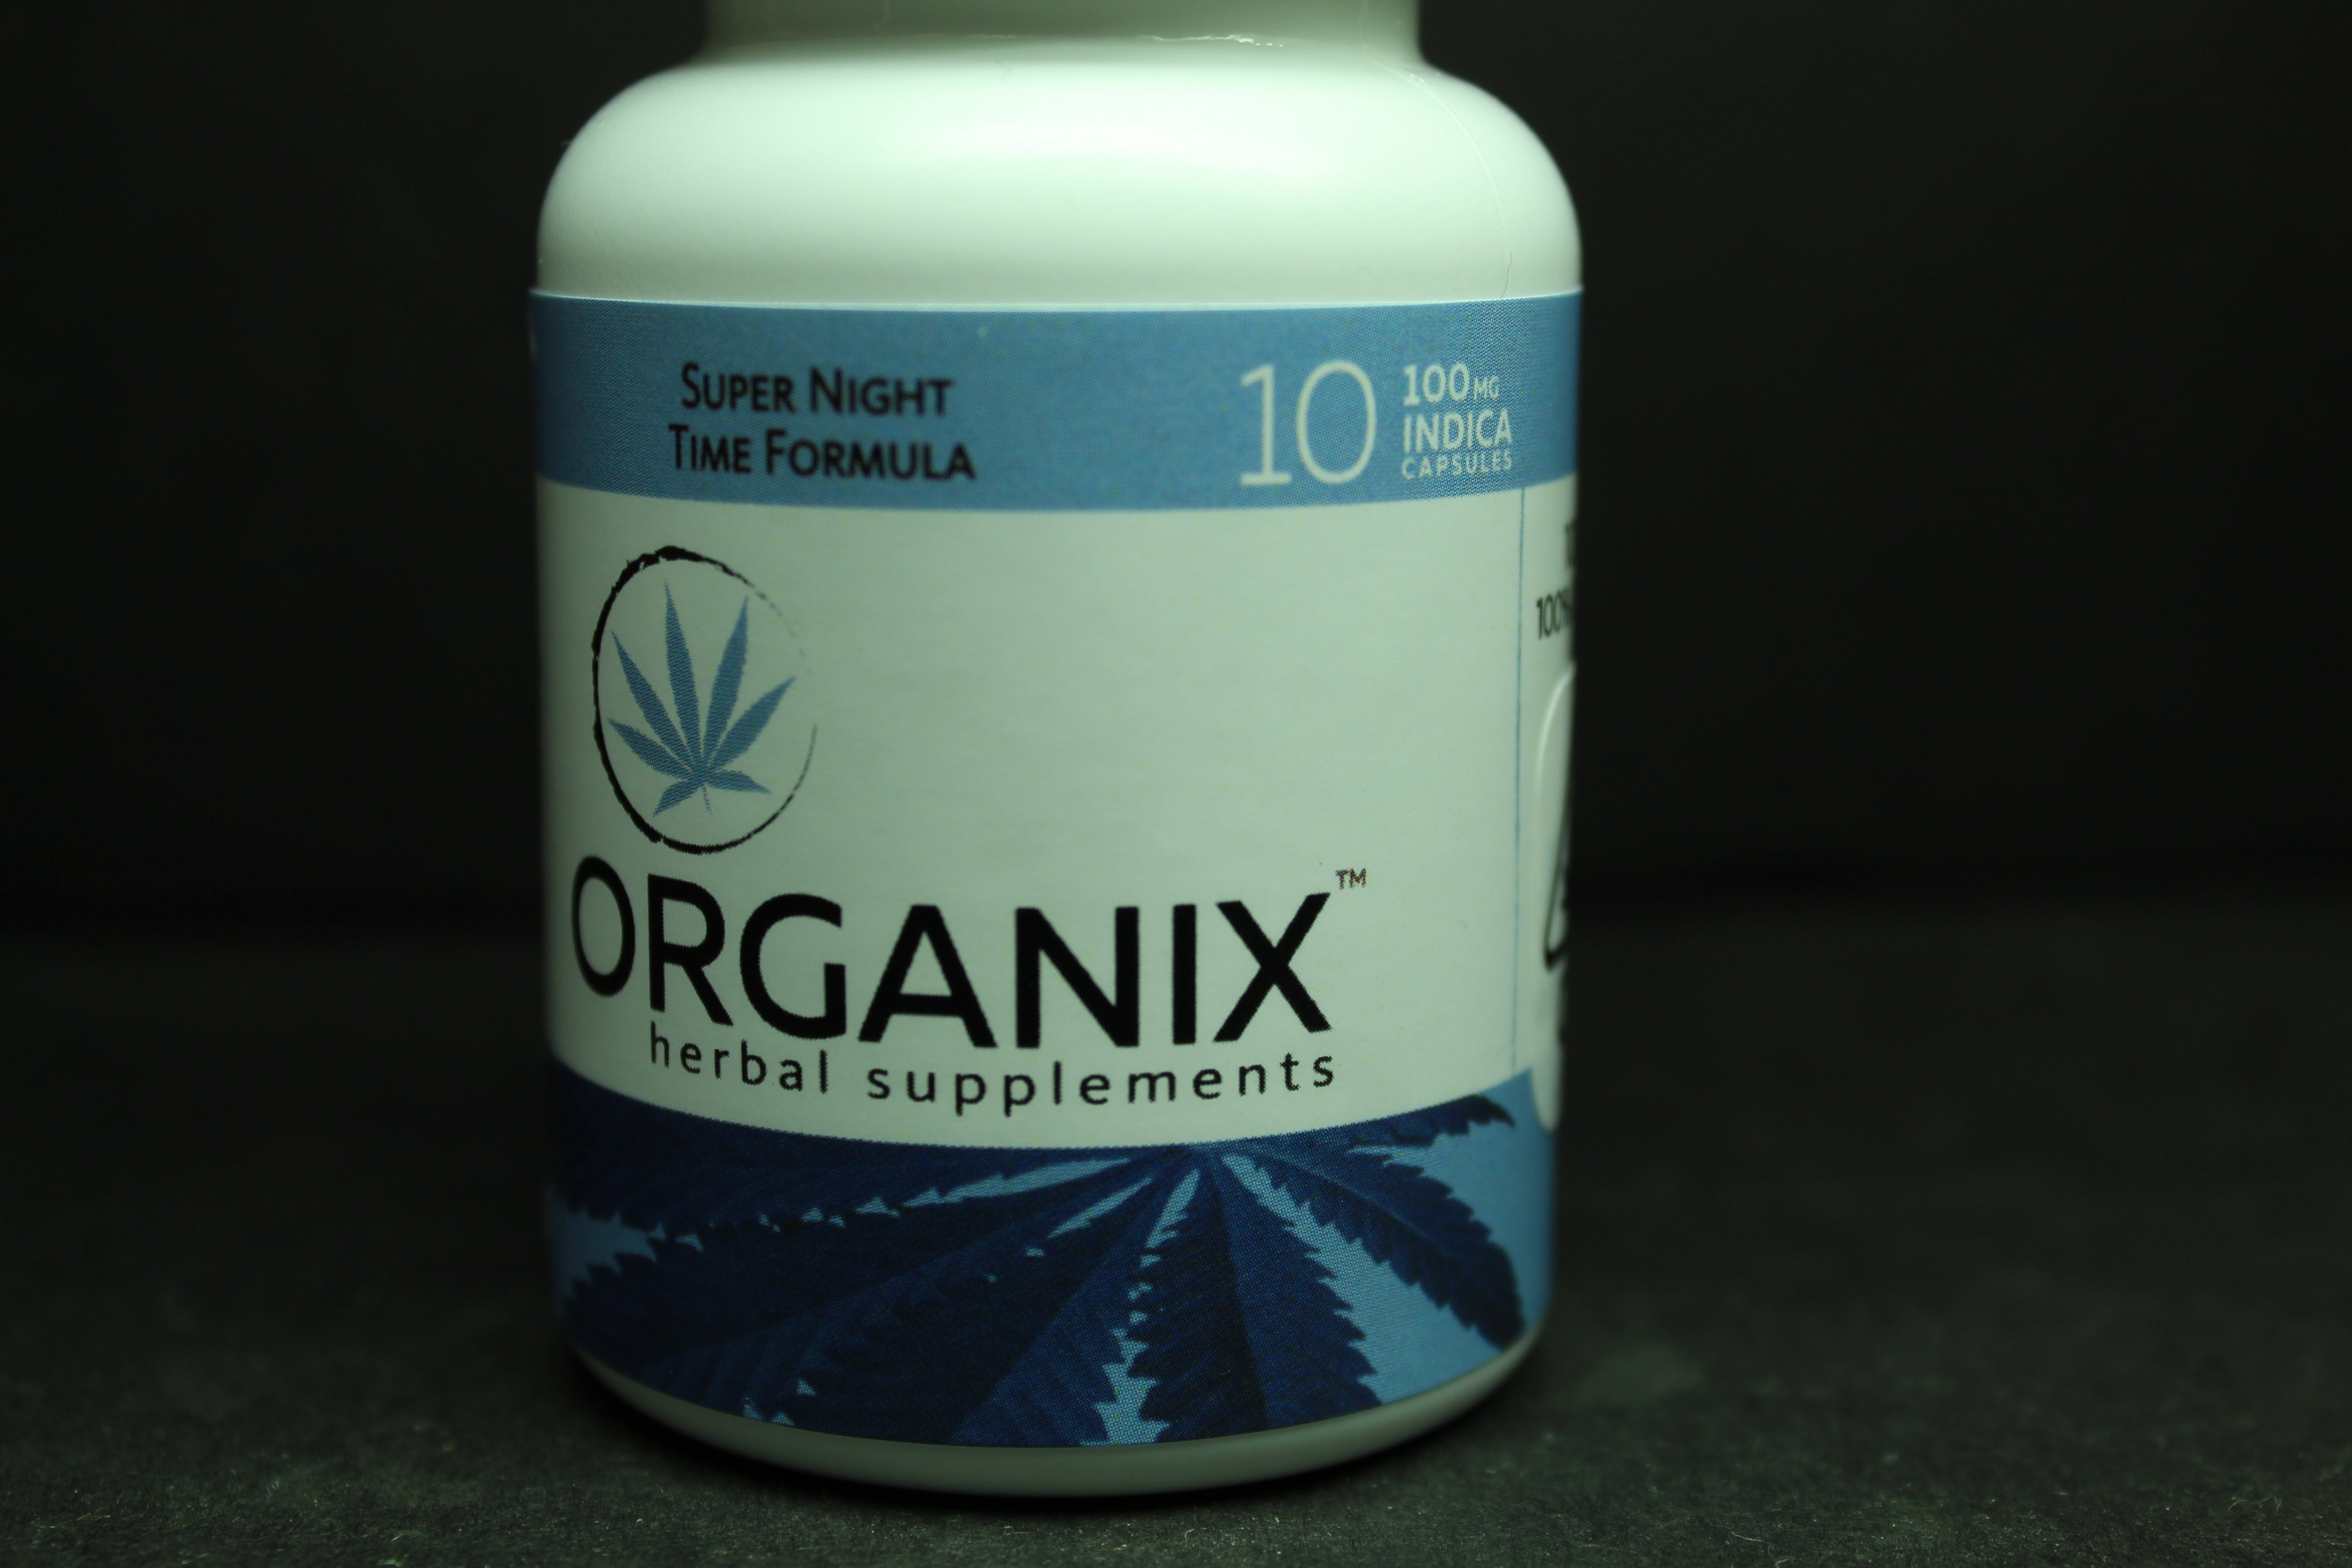 edible-organix-capsules-super-night-time-formula